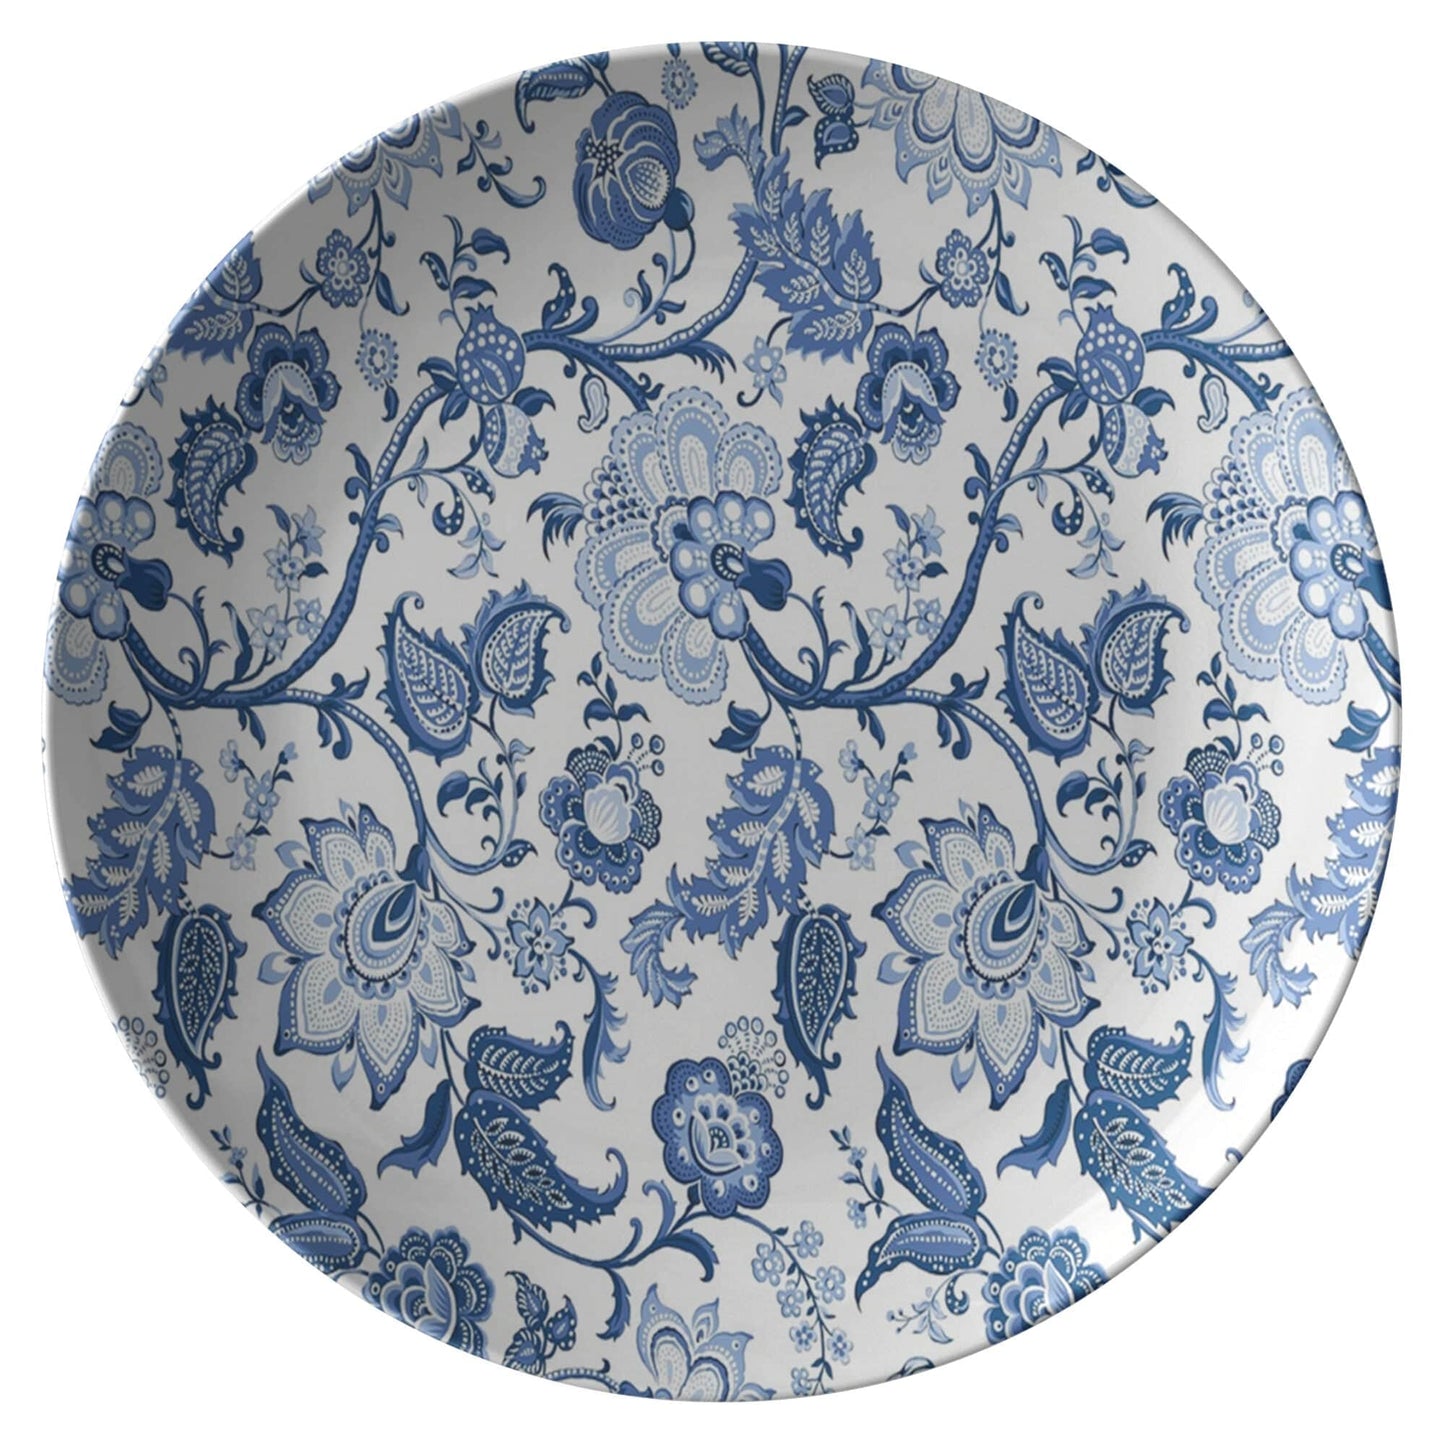 Kate McEnroe New York Chinoiserie Blue and White Floral Dinner Plates Plates